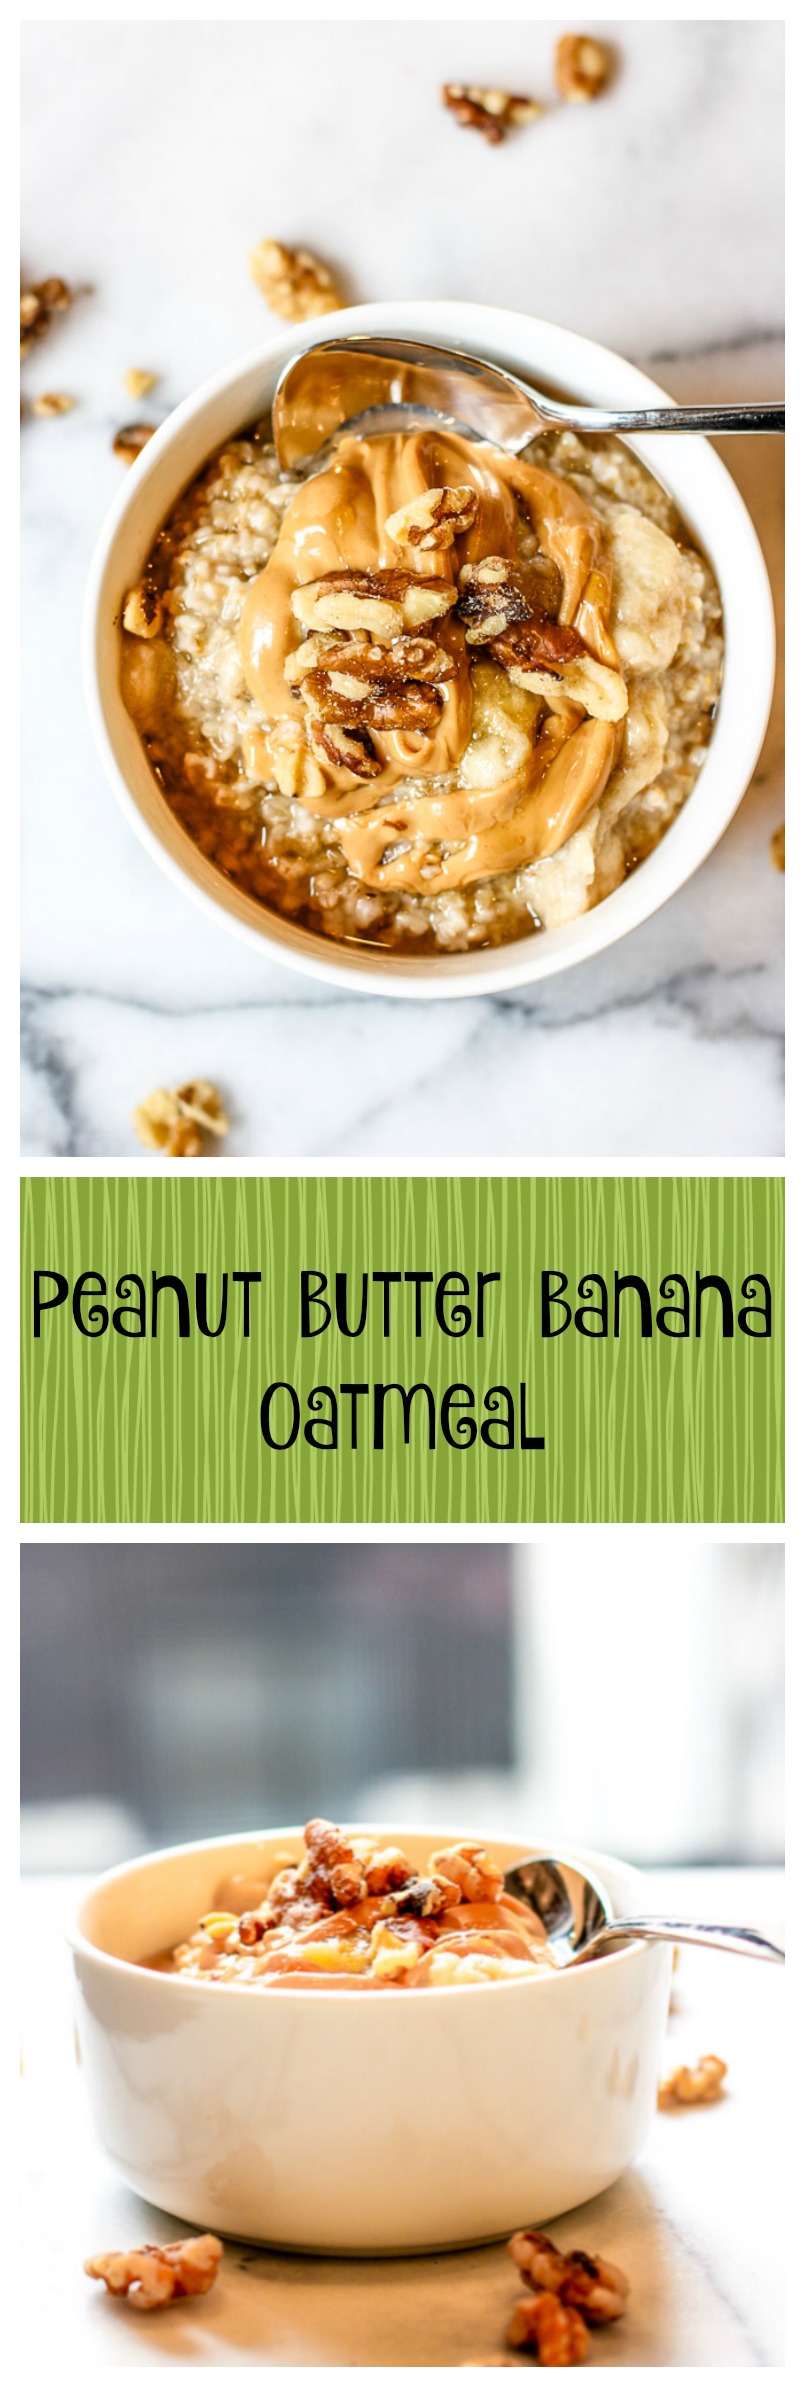 peanut butter banana oatmeal